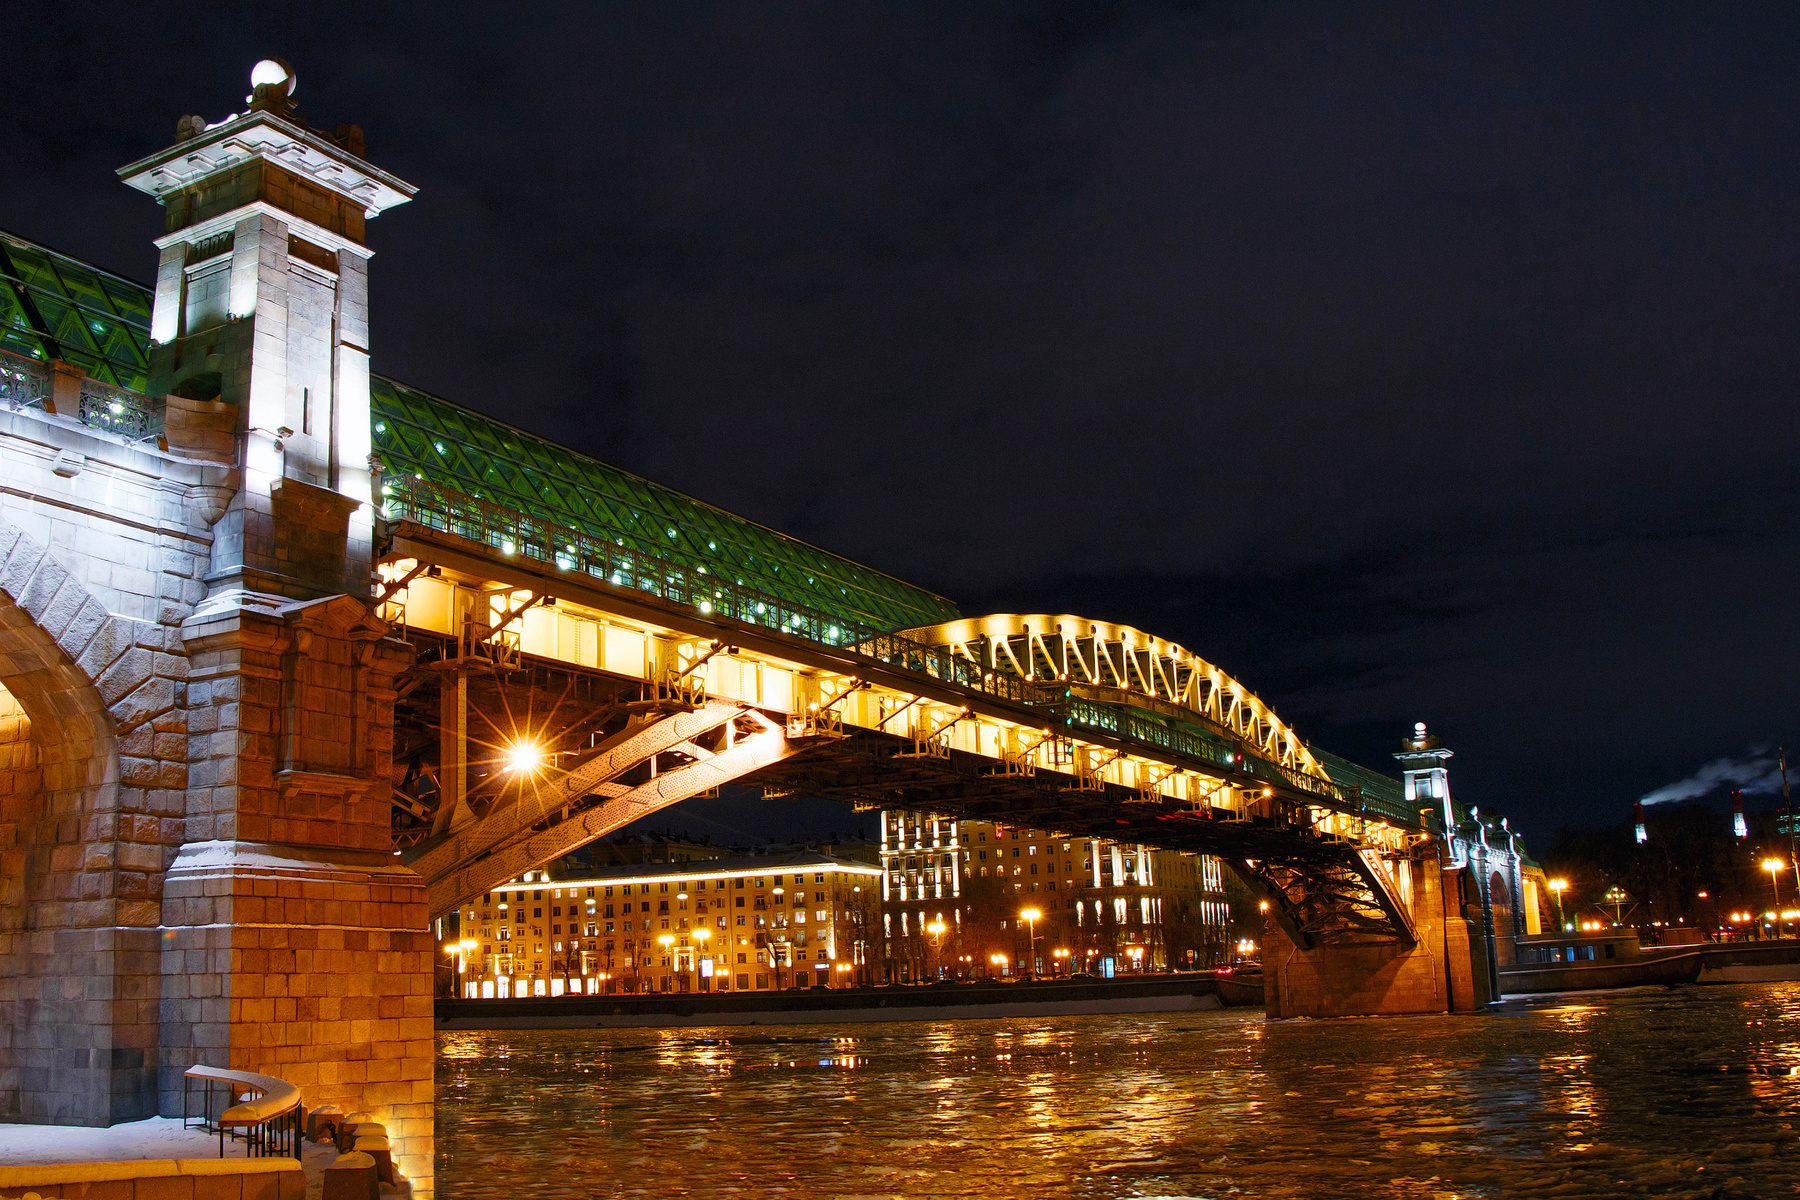 Пушкинский мост вечером Москва Россия мост набережная река ночь вечер огни подсветка архитектура